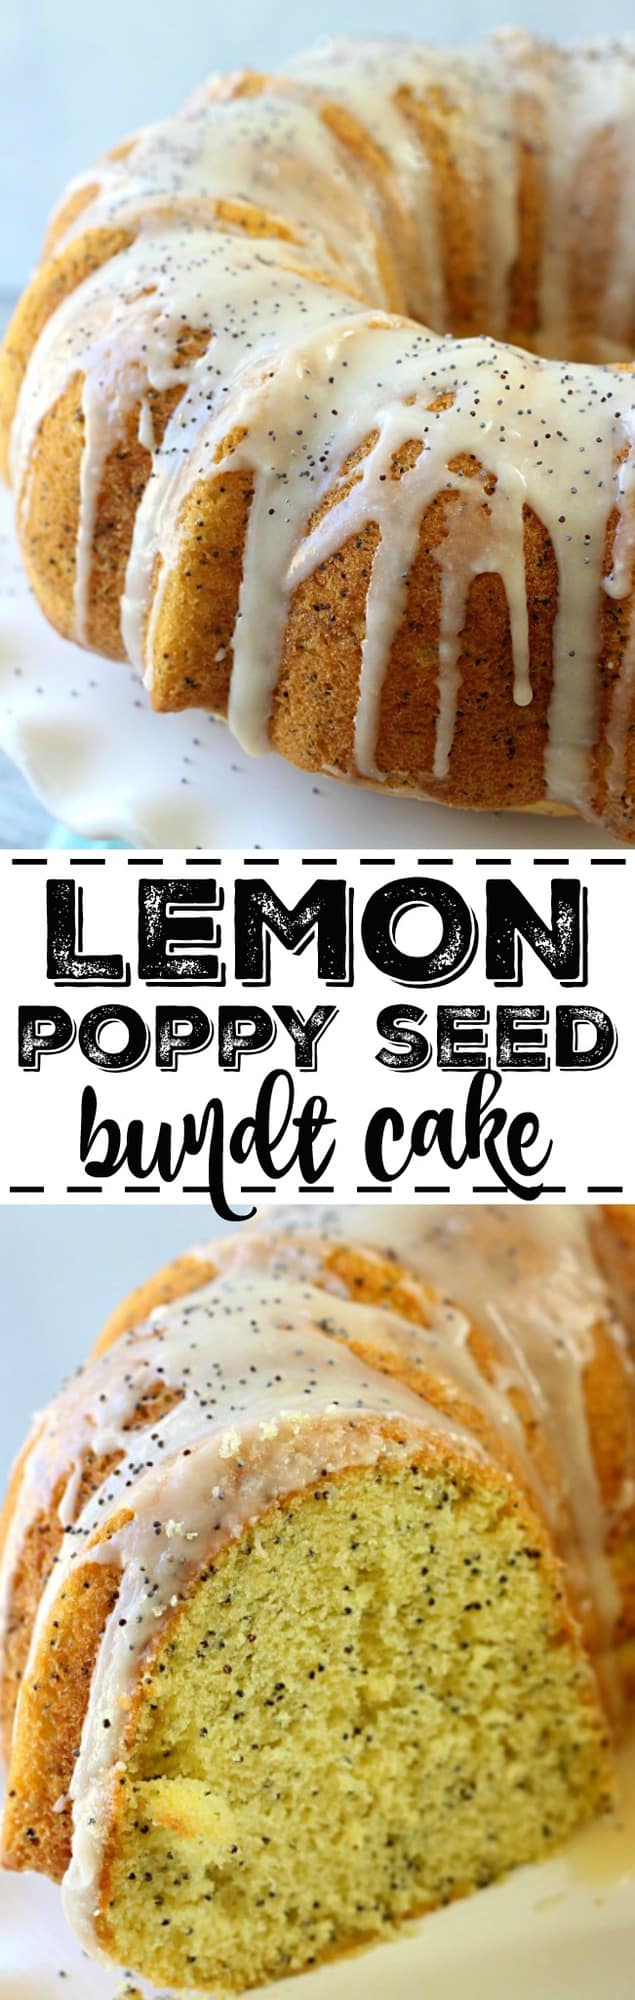 a lemon bundt cake with poppyseed vanilla glaze